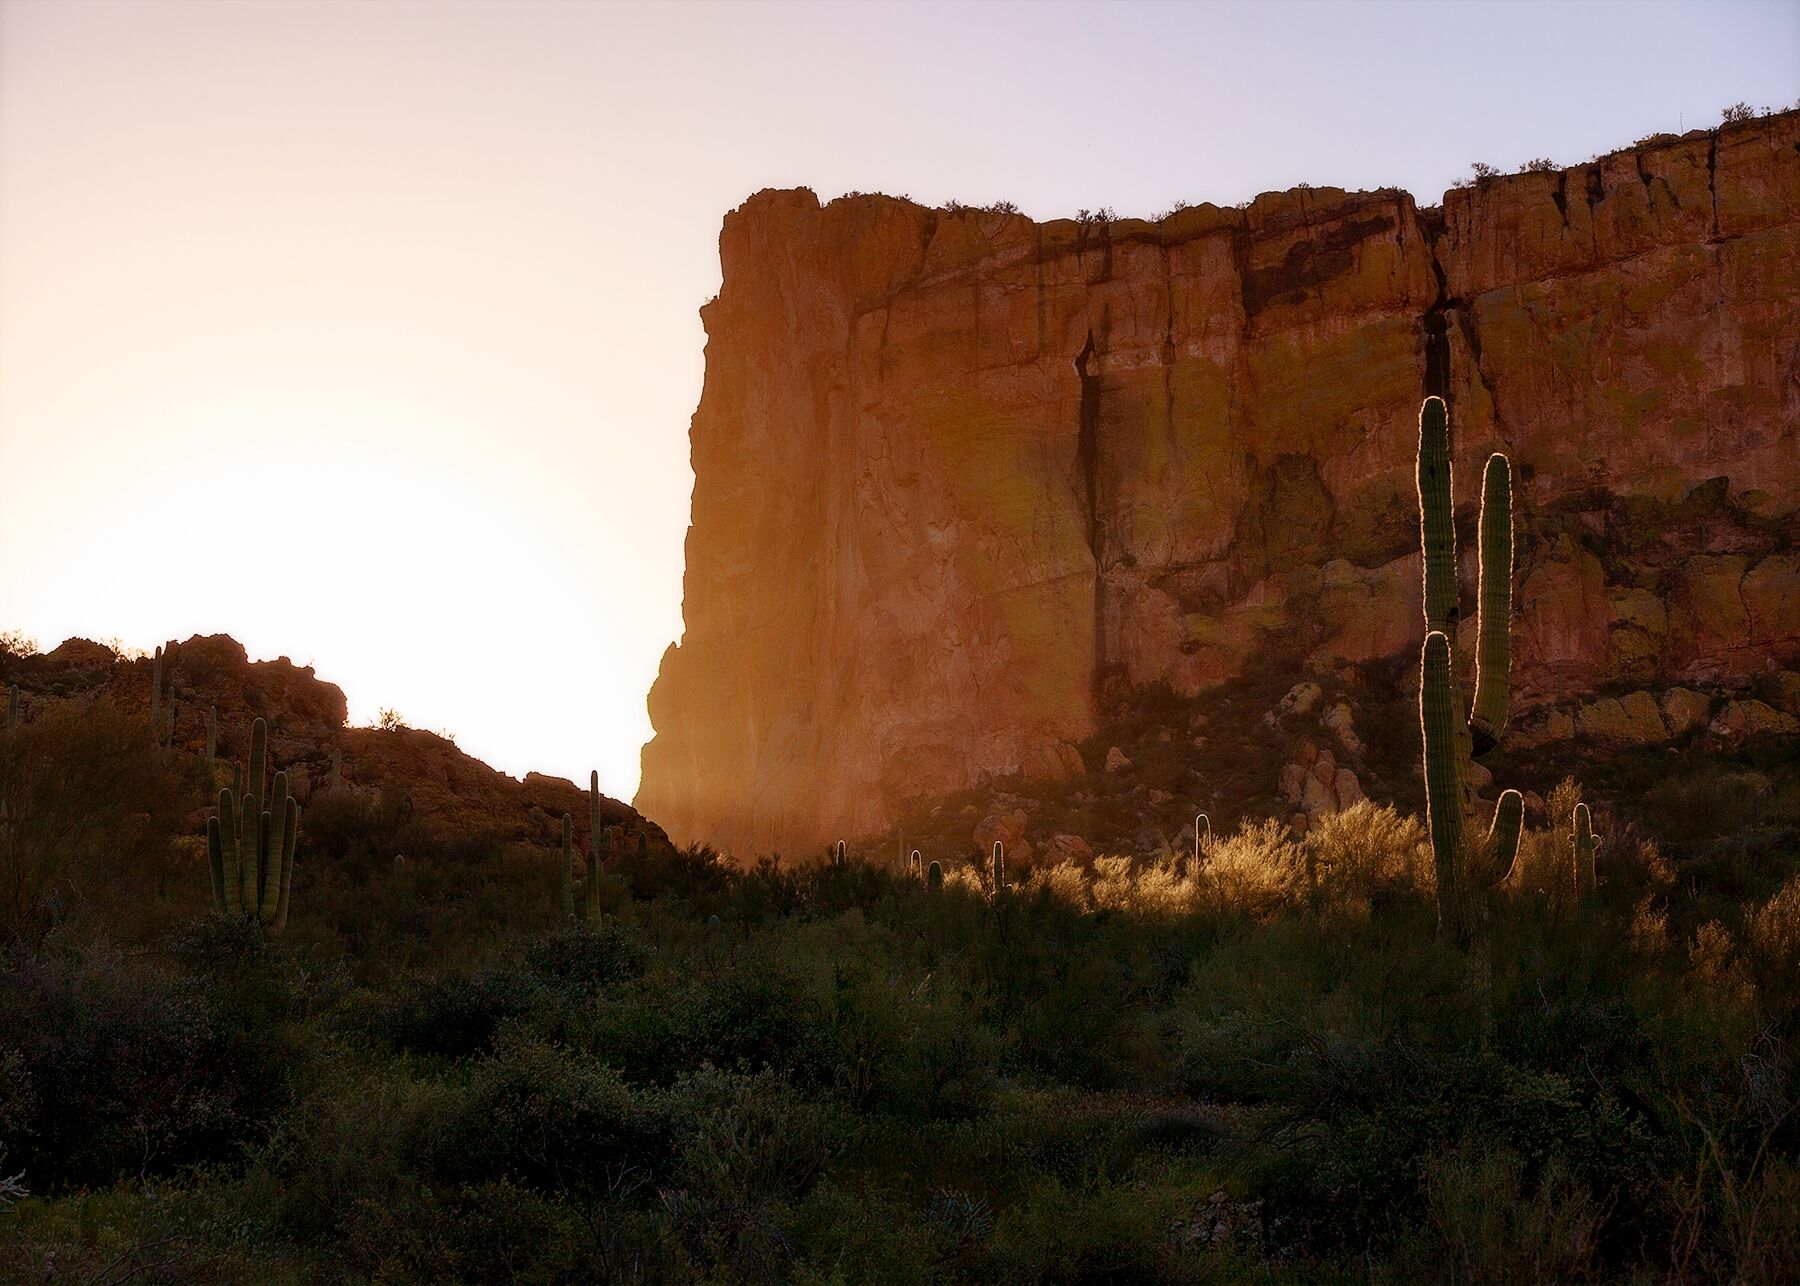 Sun peaks around a rock formation over a saguaro cactus in Lost Dutchman State Park, Arizona